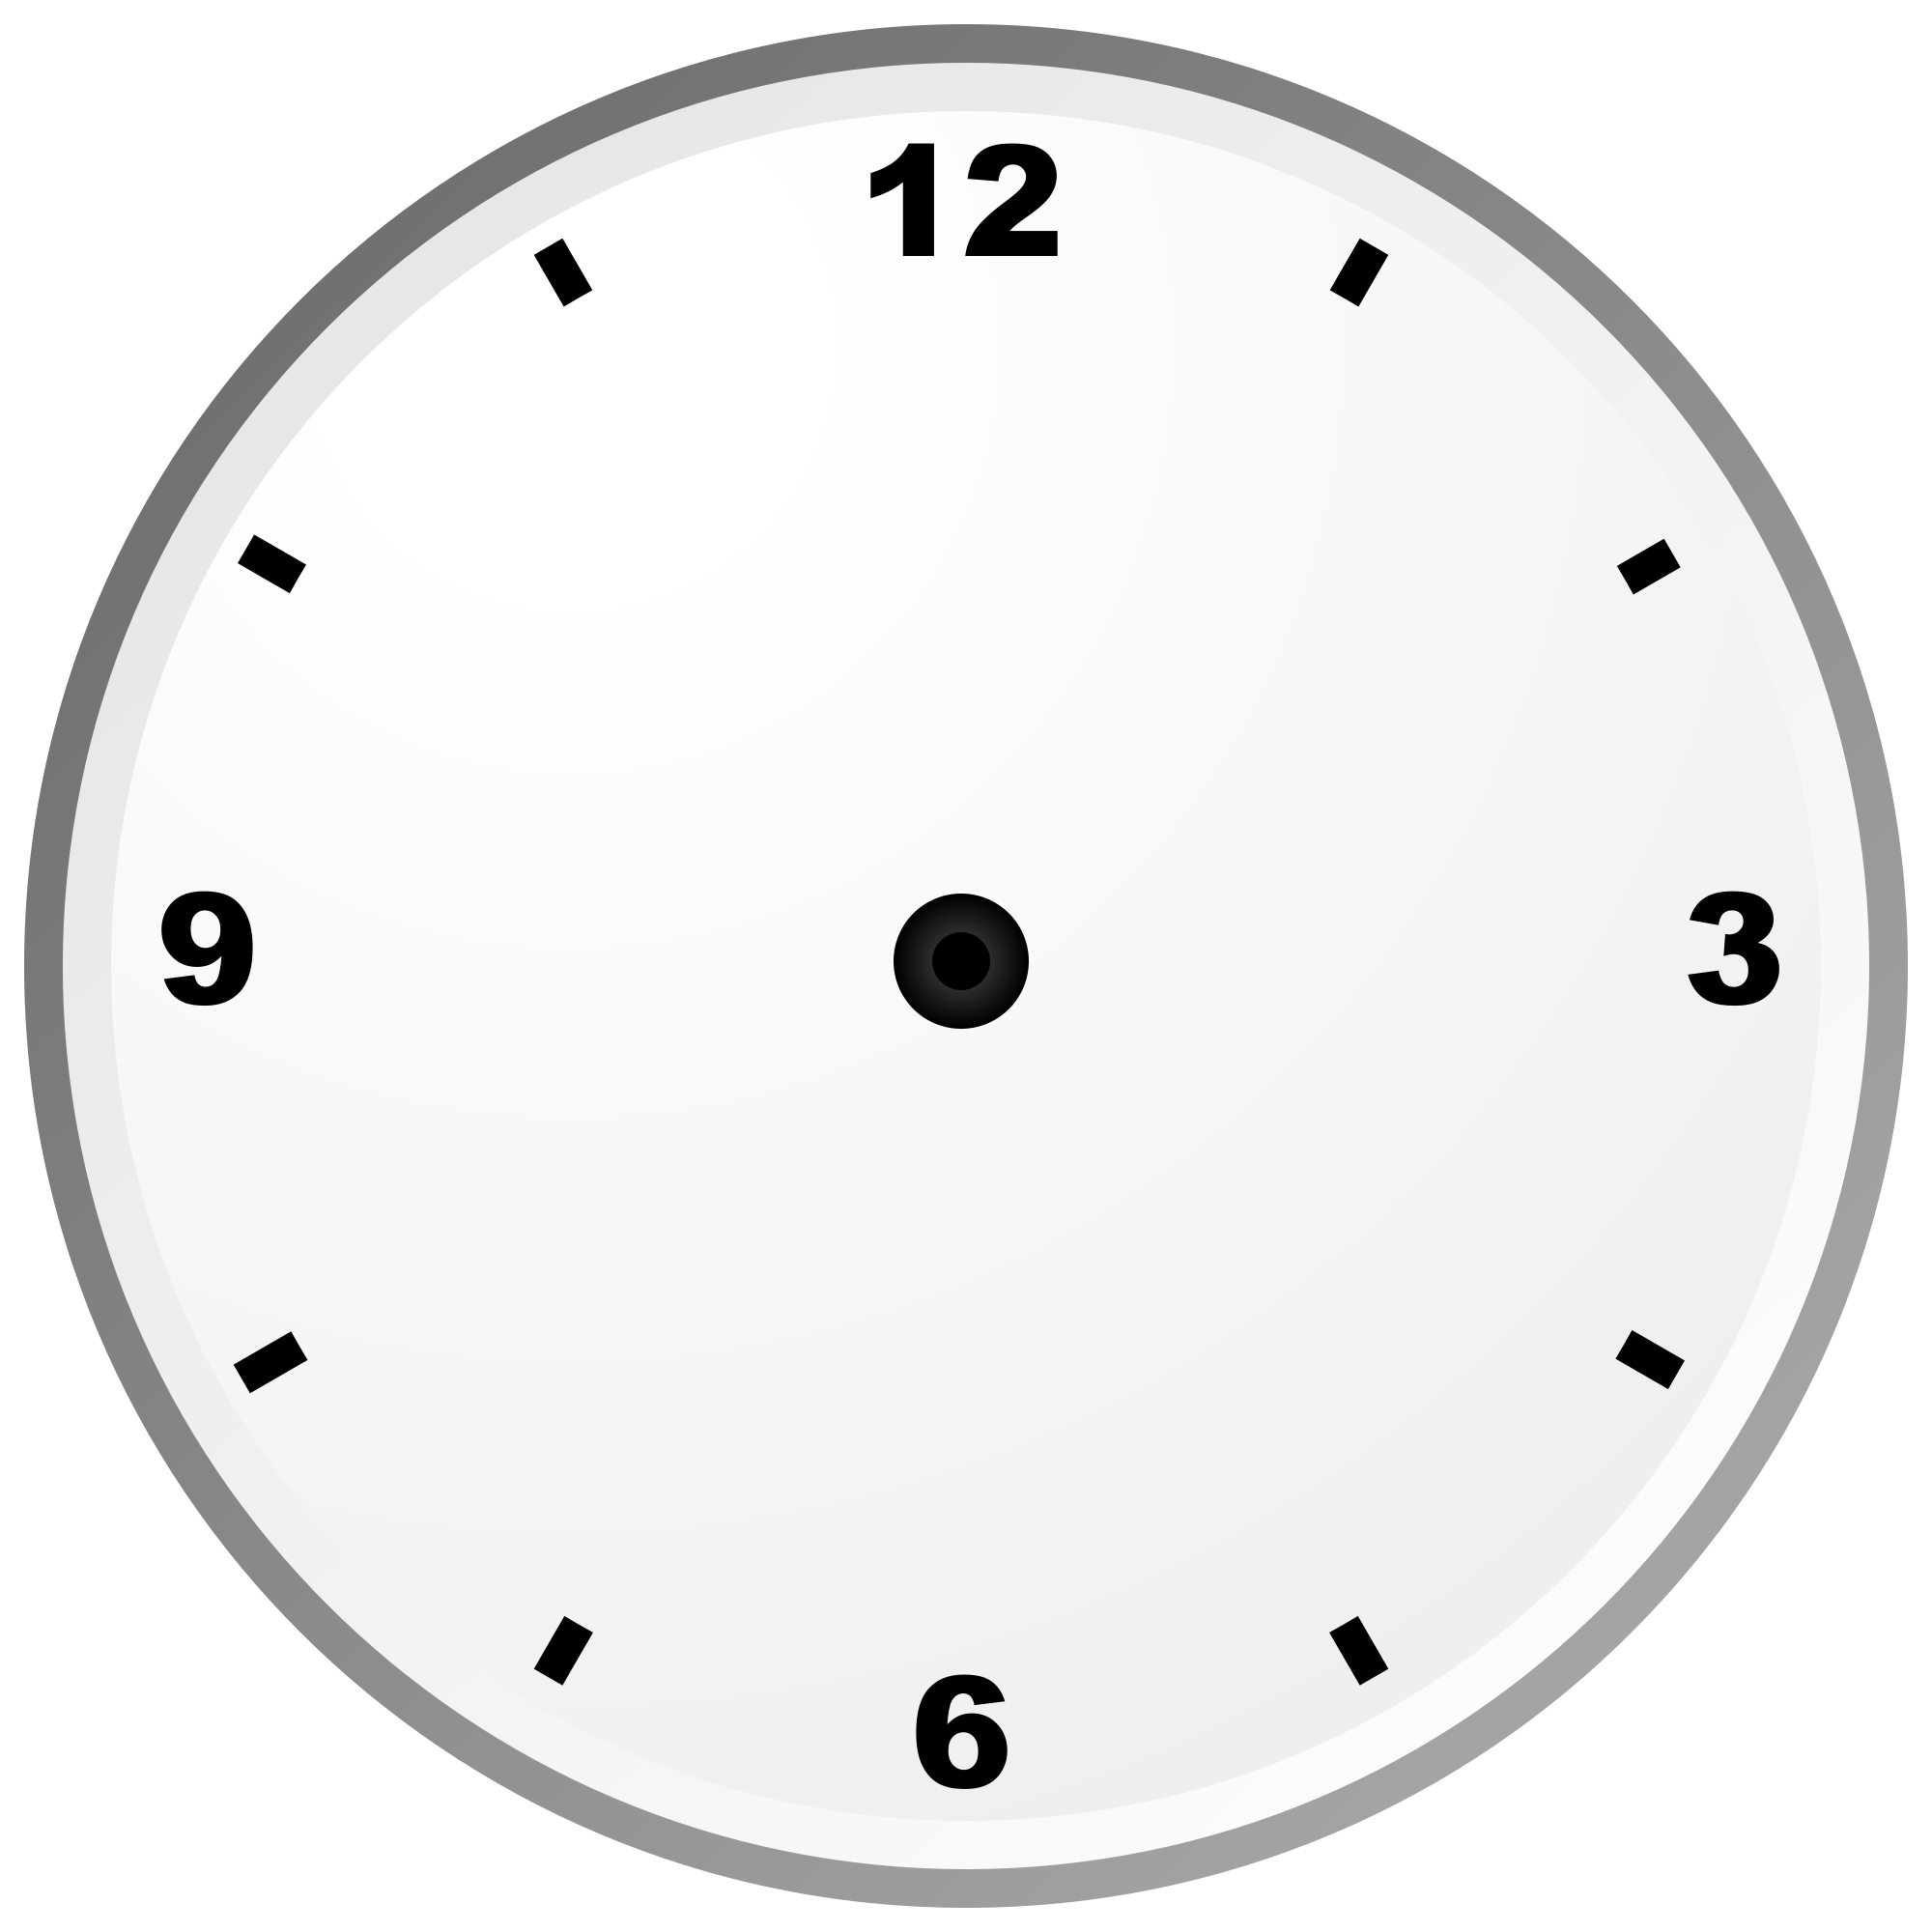 File:Analogue clock face.svg - Wikimedia Commons